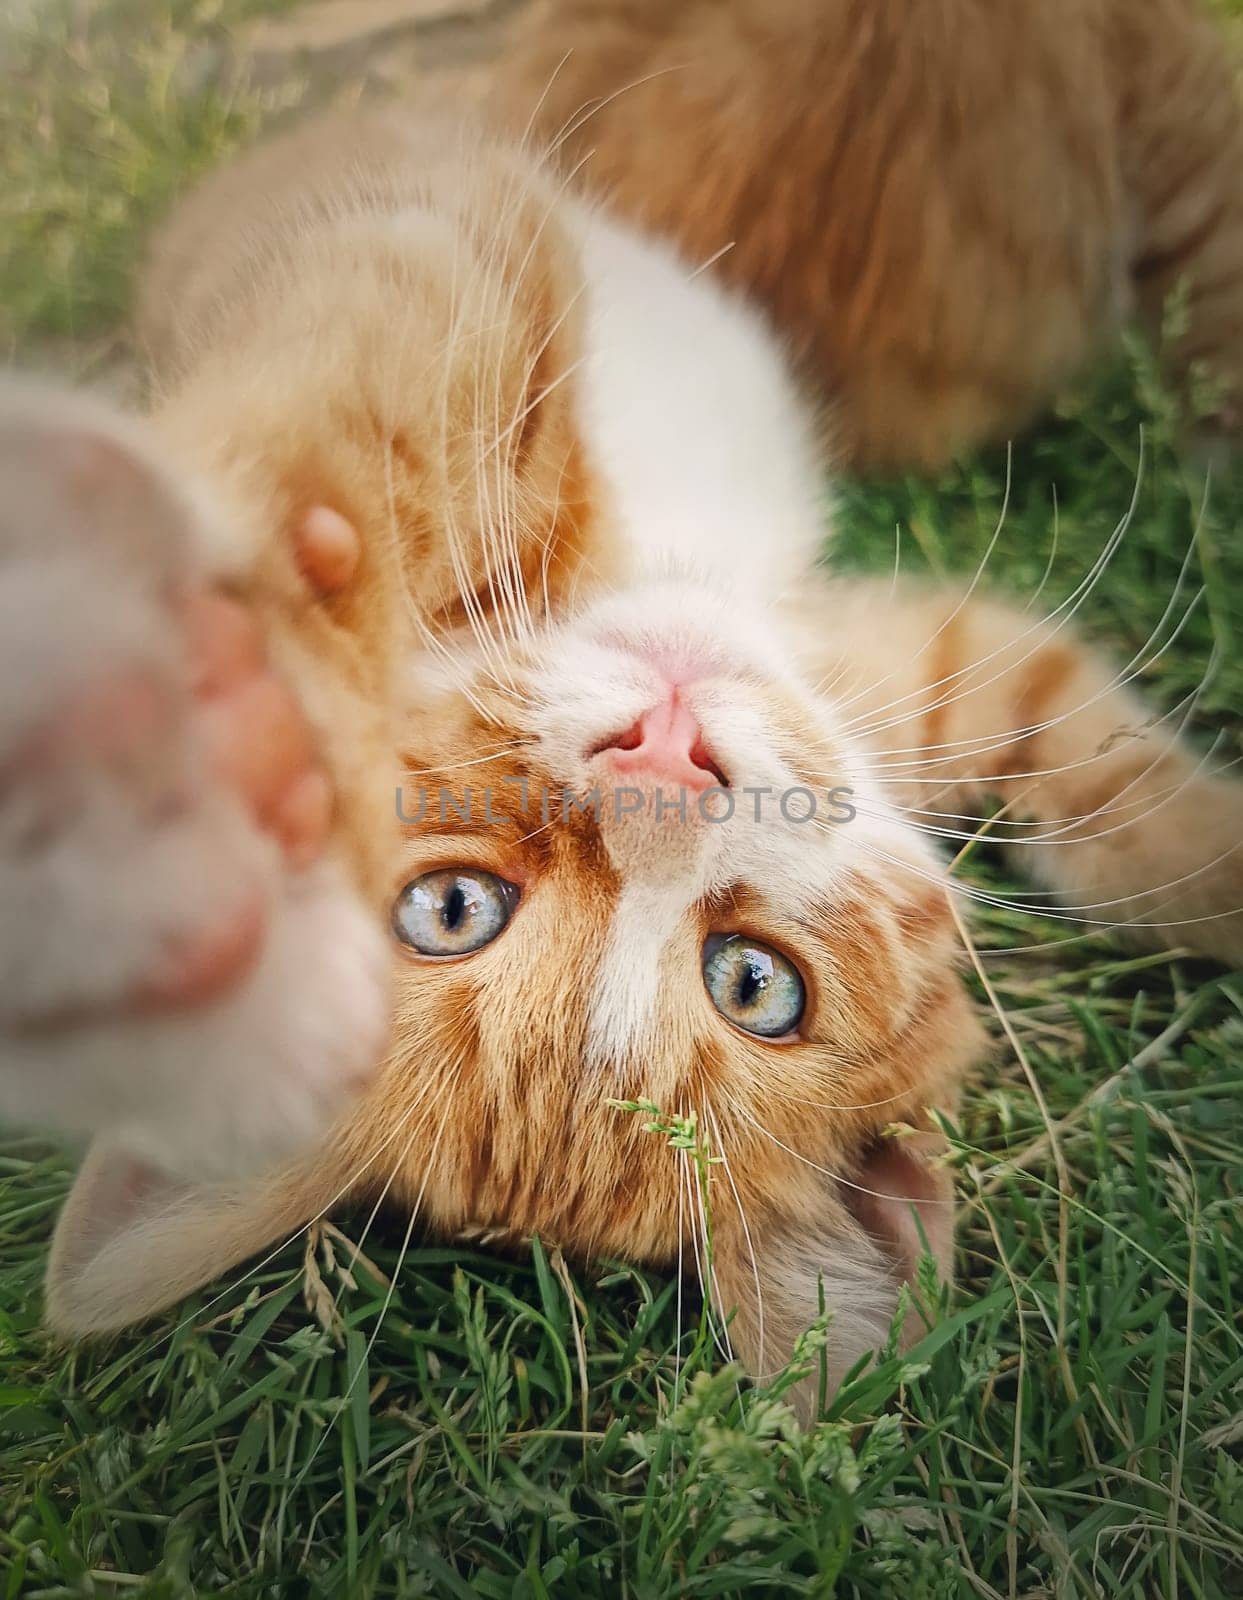 Playful orange kitten lying upside down on the green grass. Little ginger cat cute scene outdoors in the nature